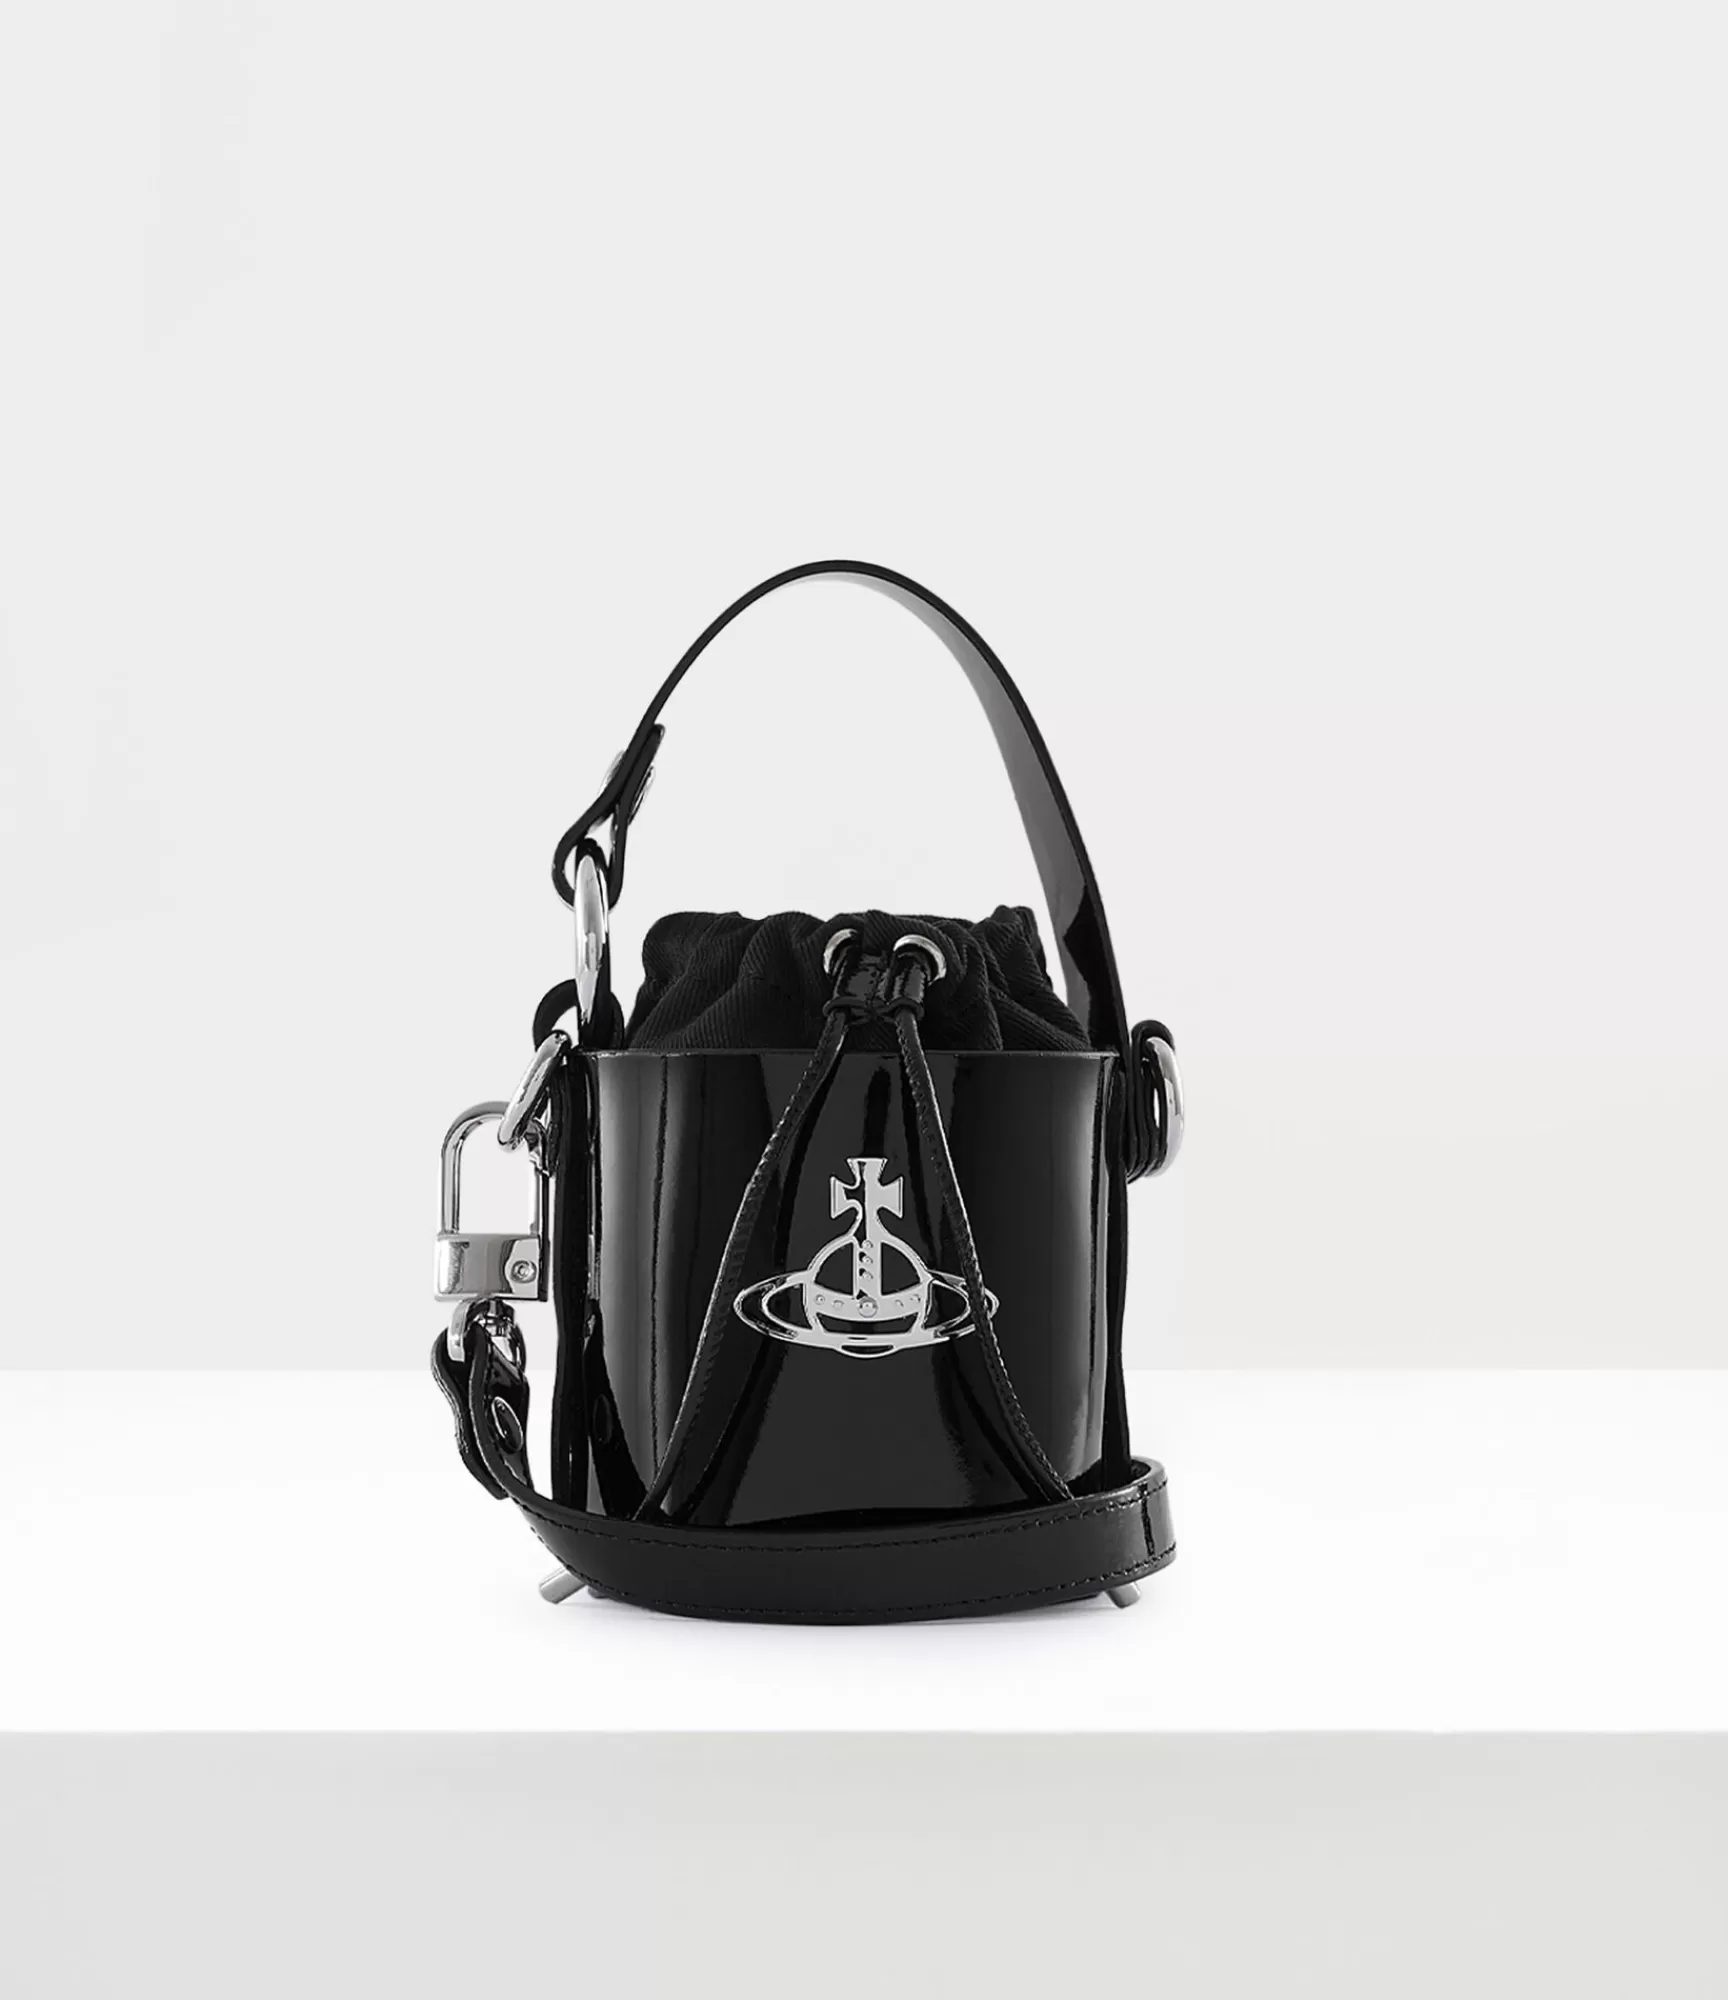 Vivienne Westwood Handbags*Mini daisy bag Black